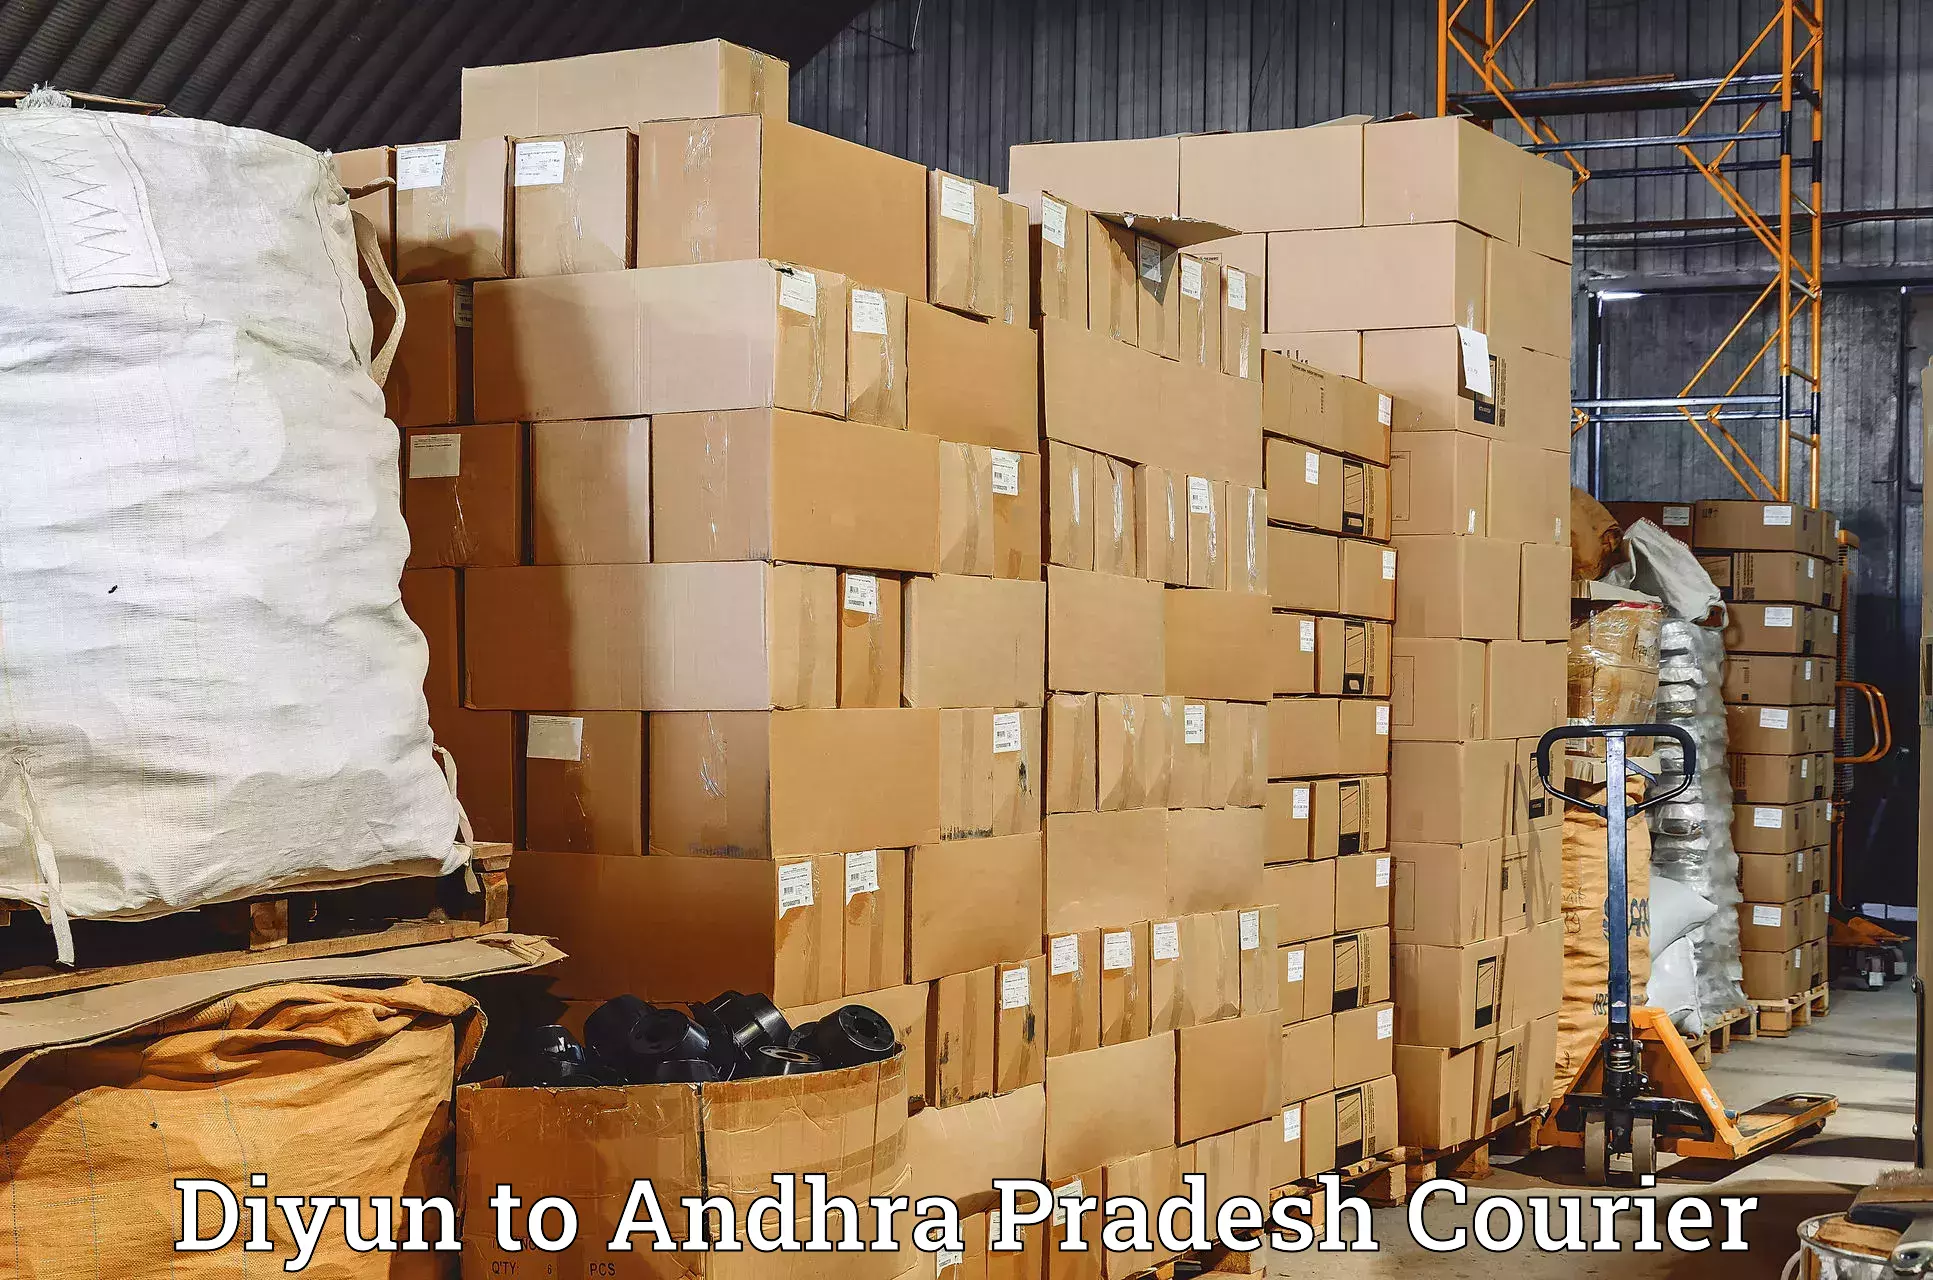 Courier service innovation Diyun to Andhra Pradesh